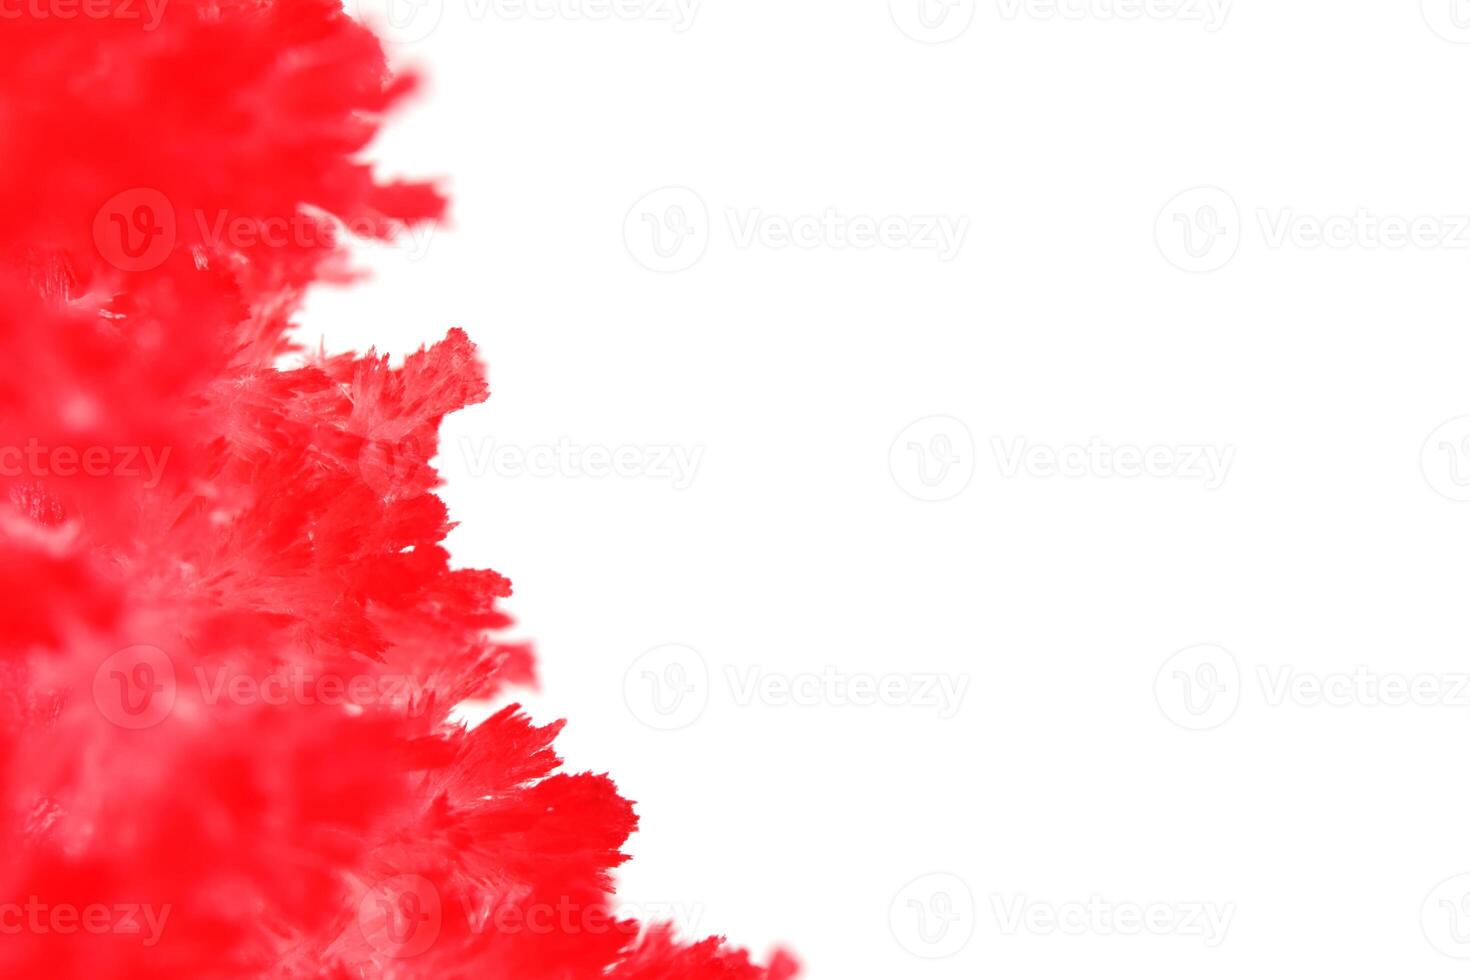 makro bild röd salt kristall på vit bakgrund. foto